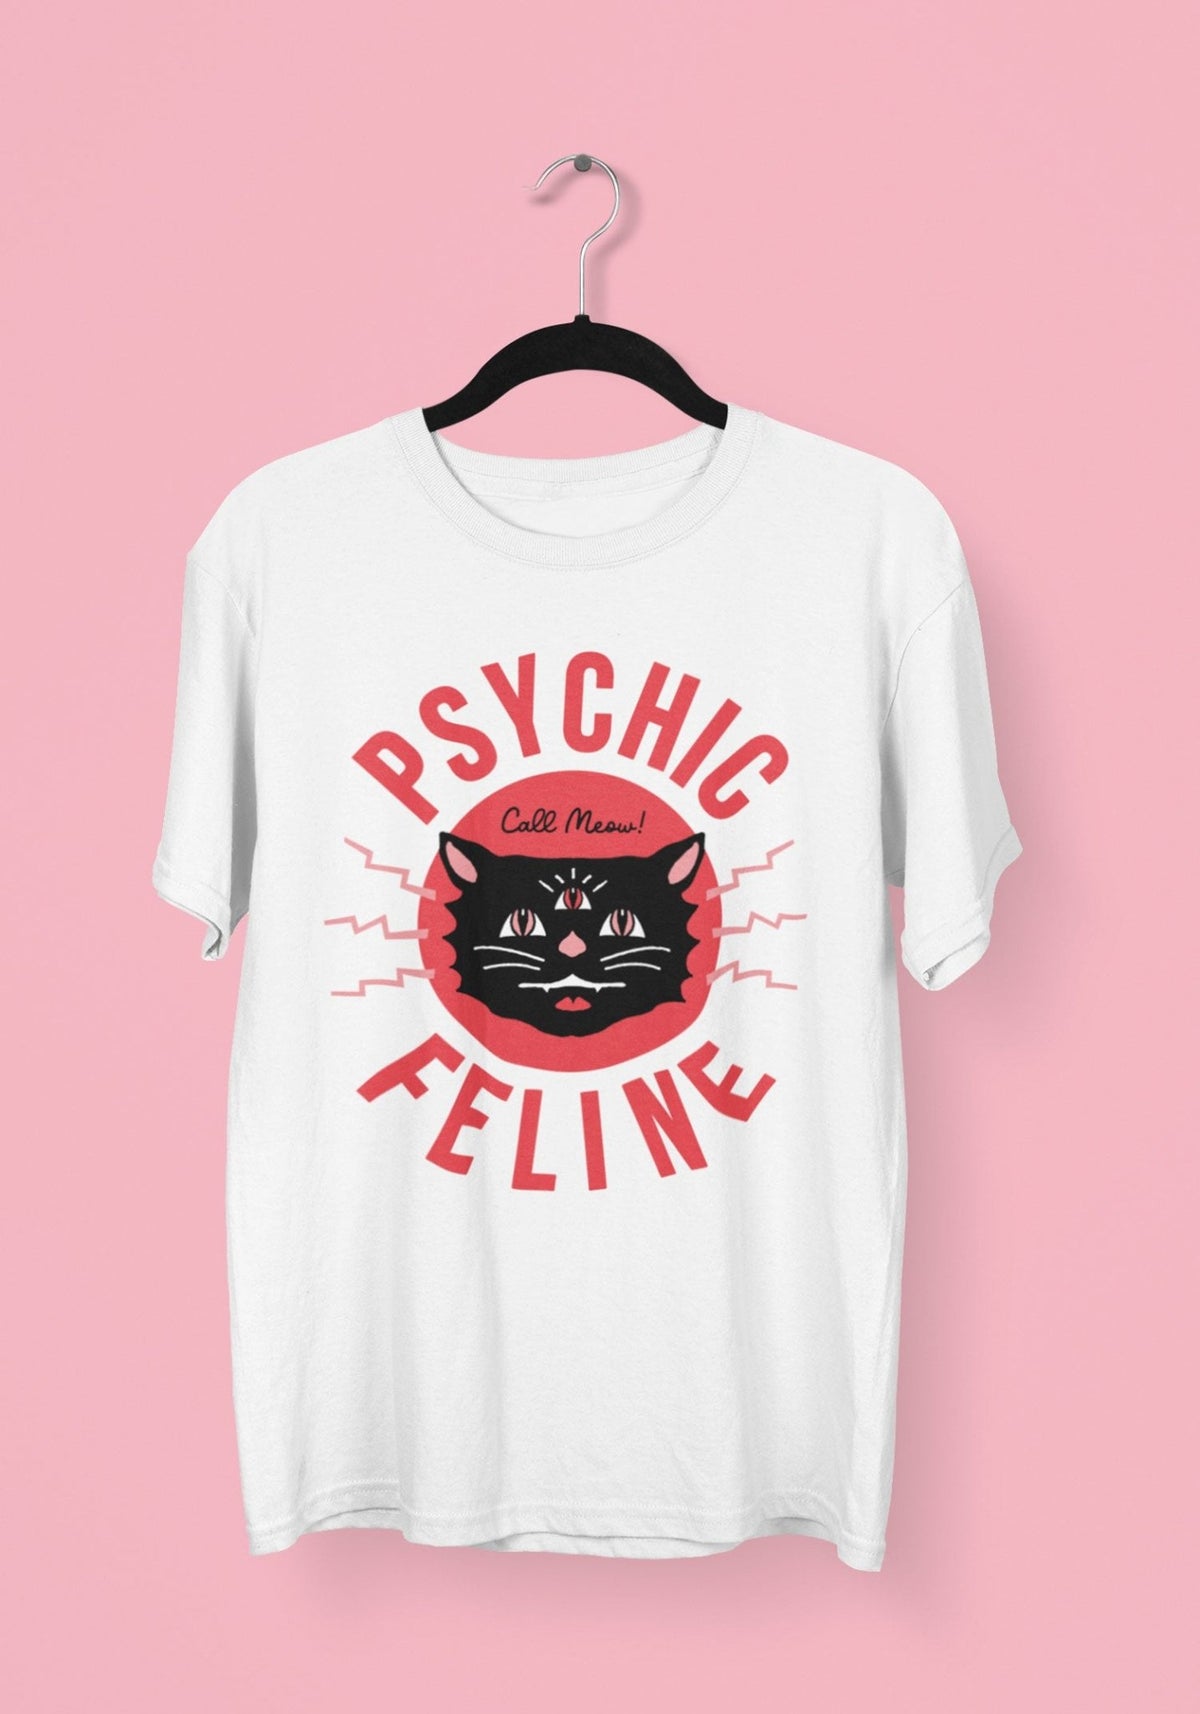 Psychic Feline Tee by kaeraz black cat cat halloween